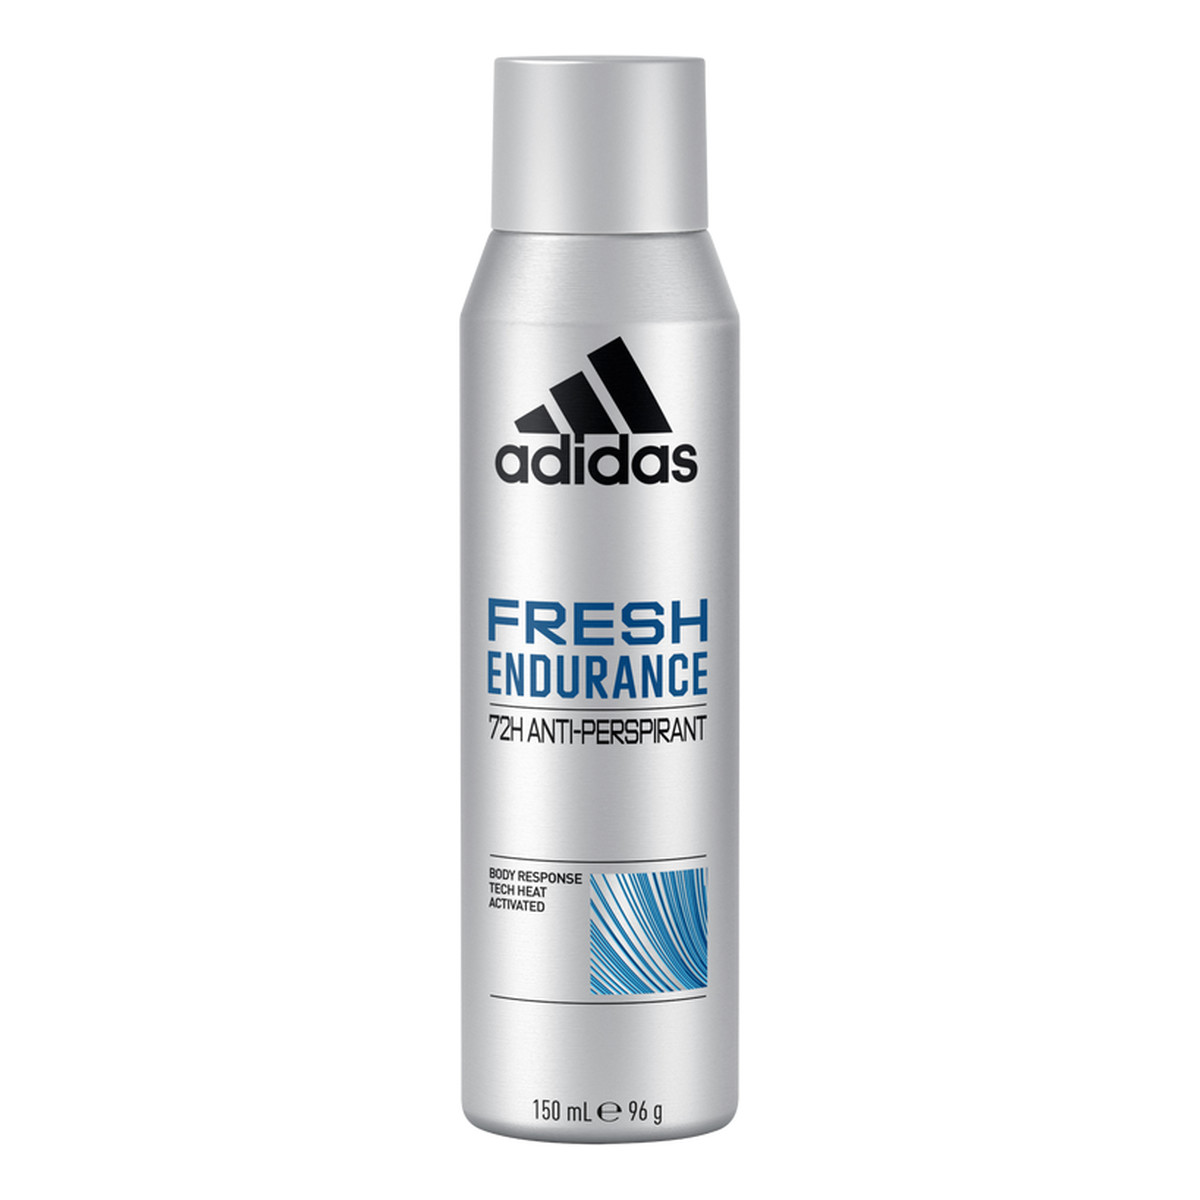 Adidas Fresh Antyperspirant Endurance 72H 150ml